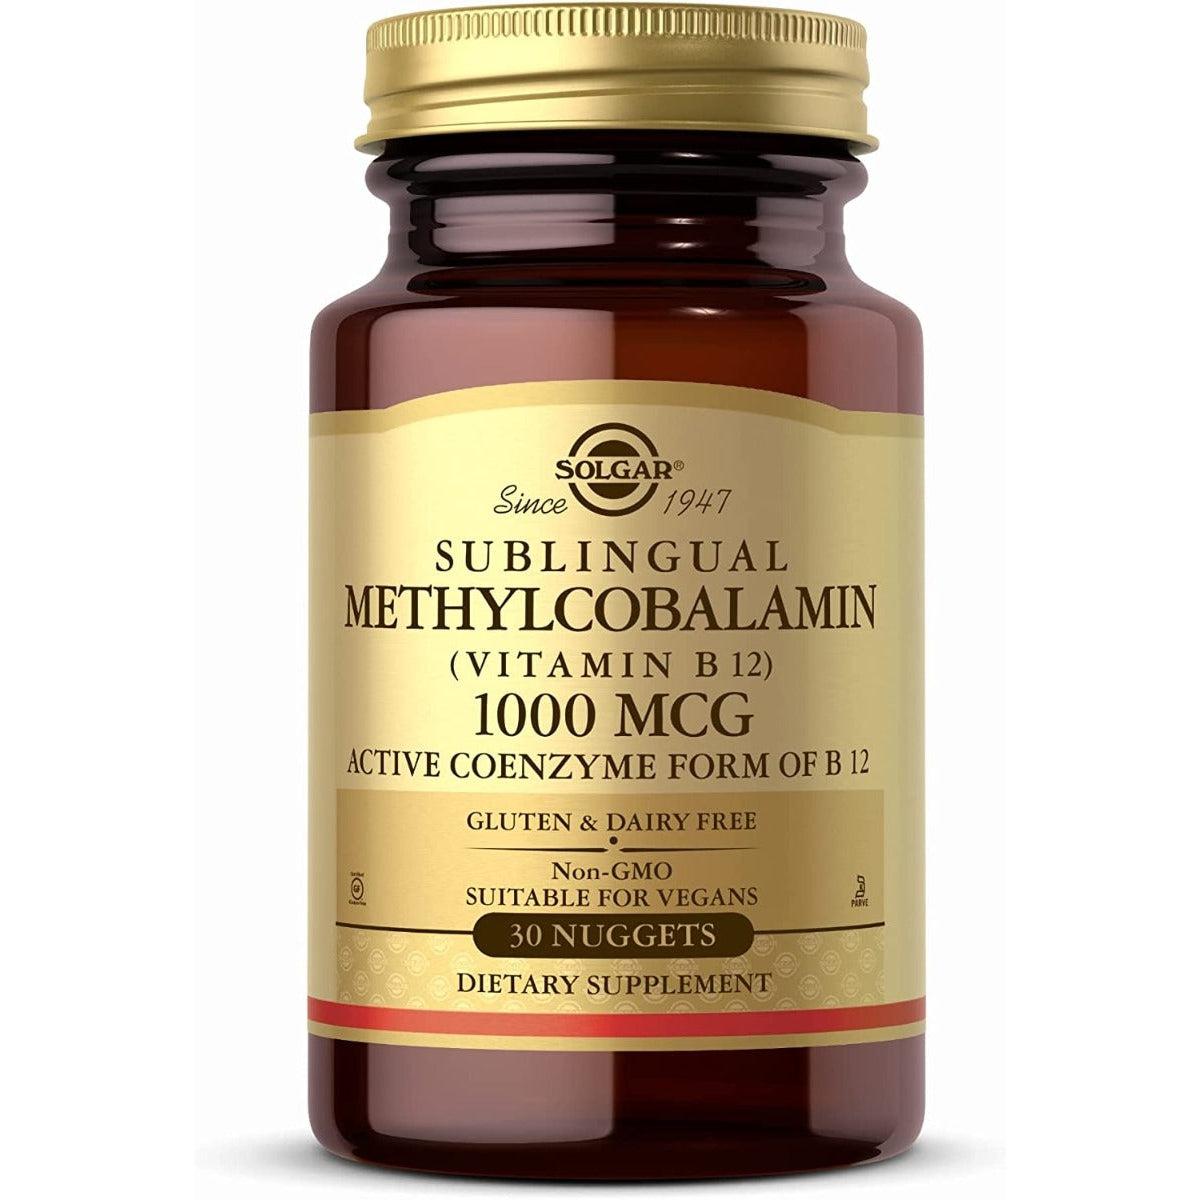 Solgar Vitamin B12 Methylcobalamin 1000 MCG 30 NUGGETS